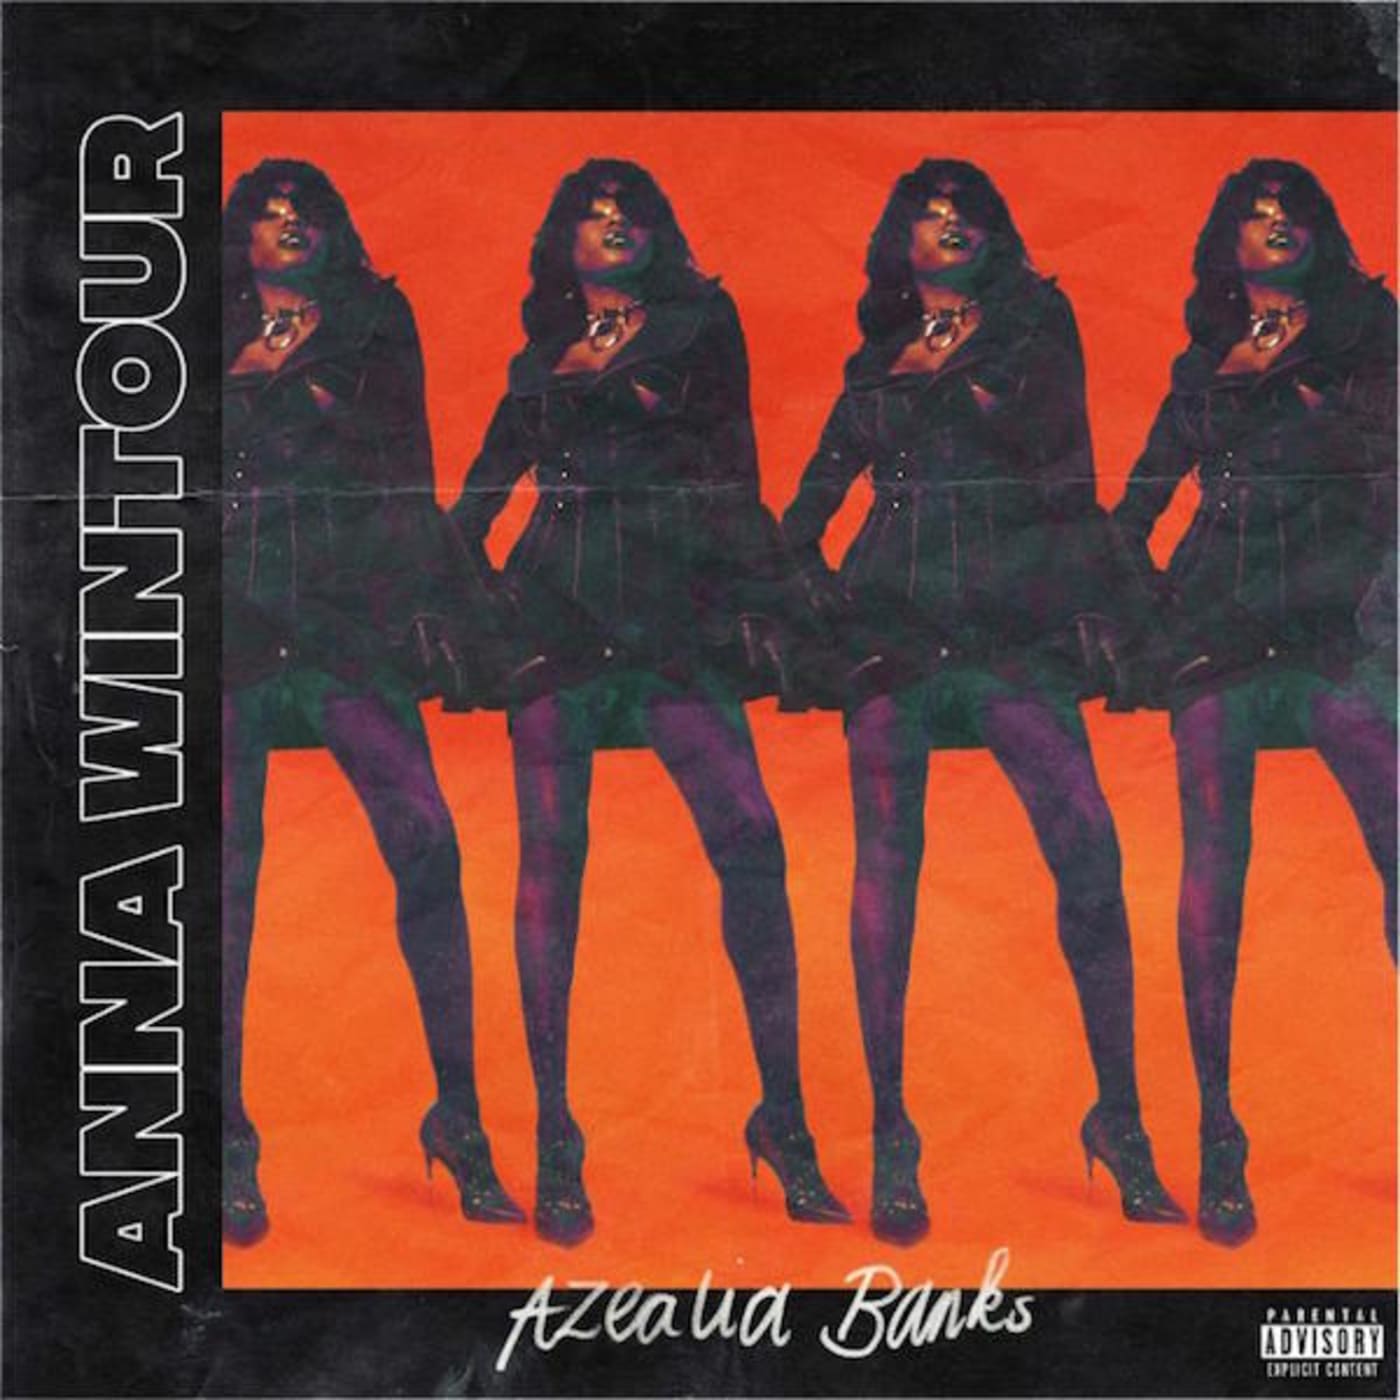 Art for Azealia Banks song "Anna Wintour"